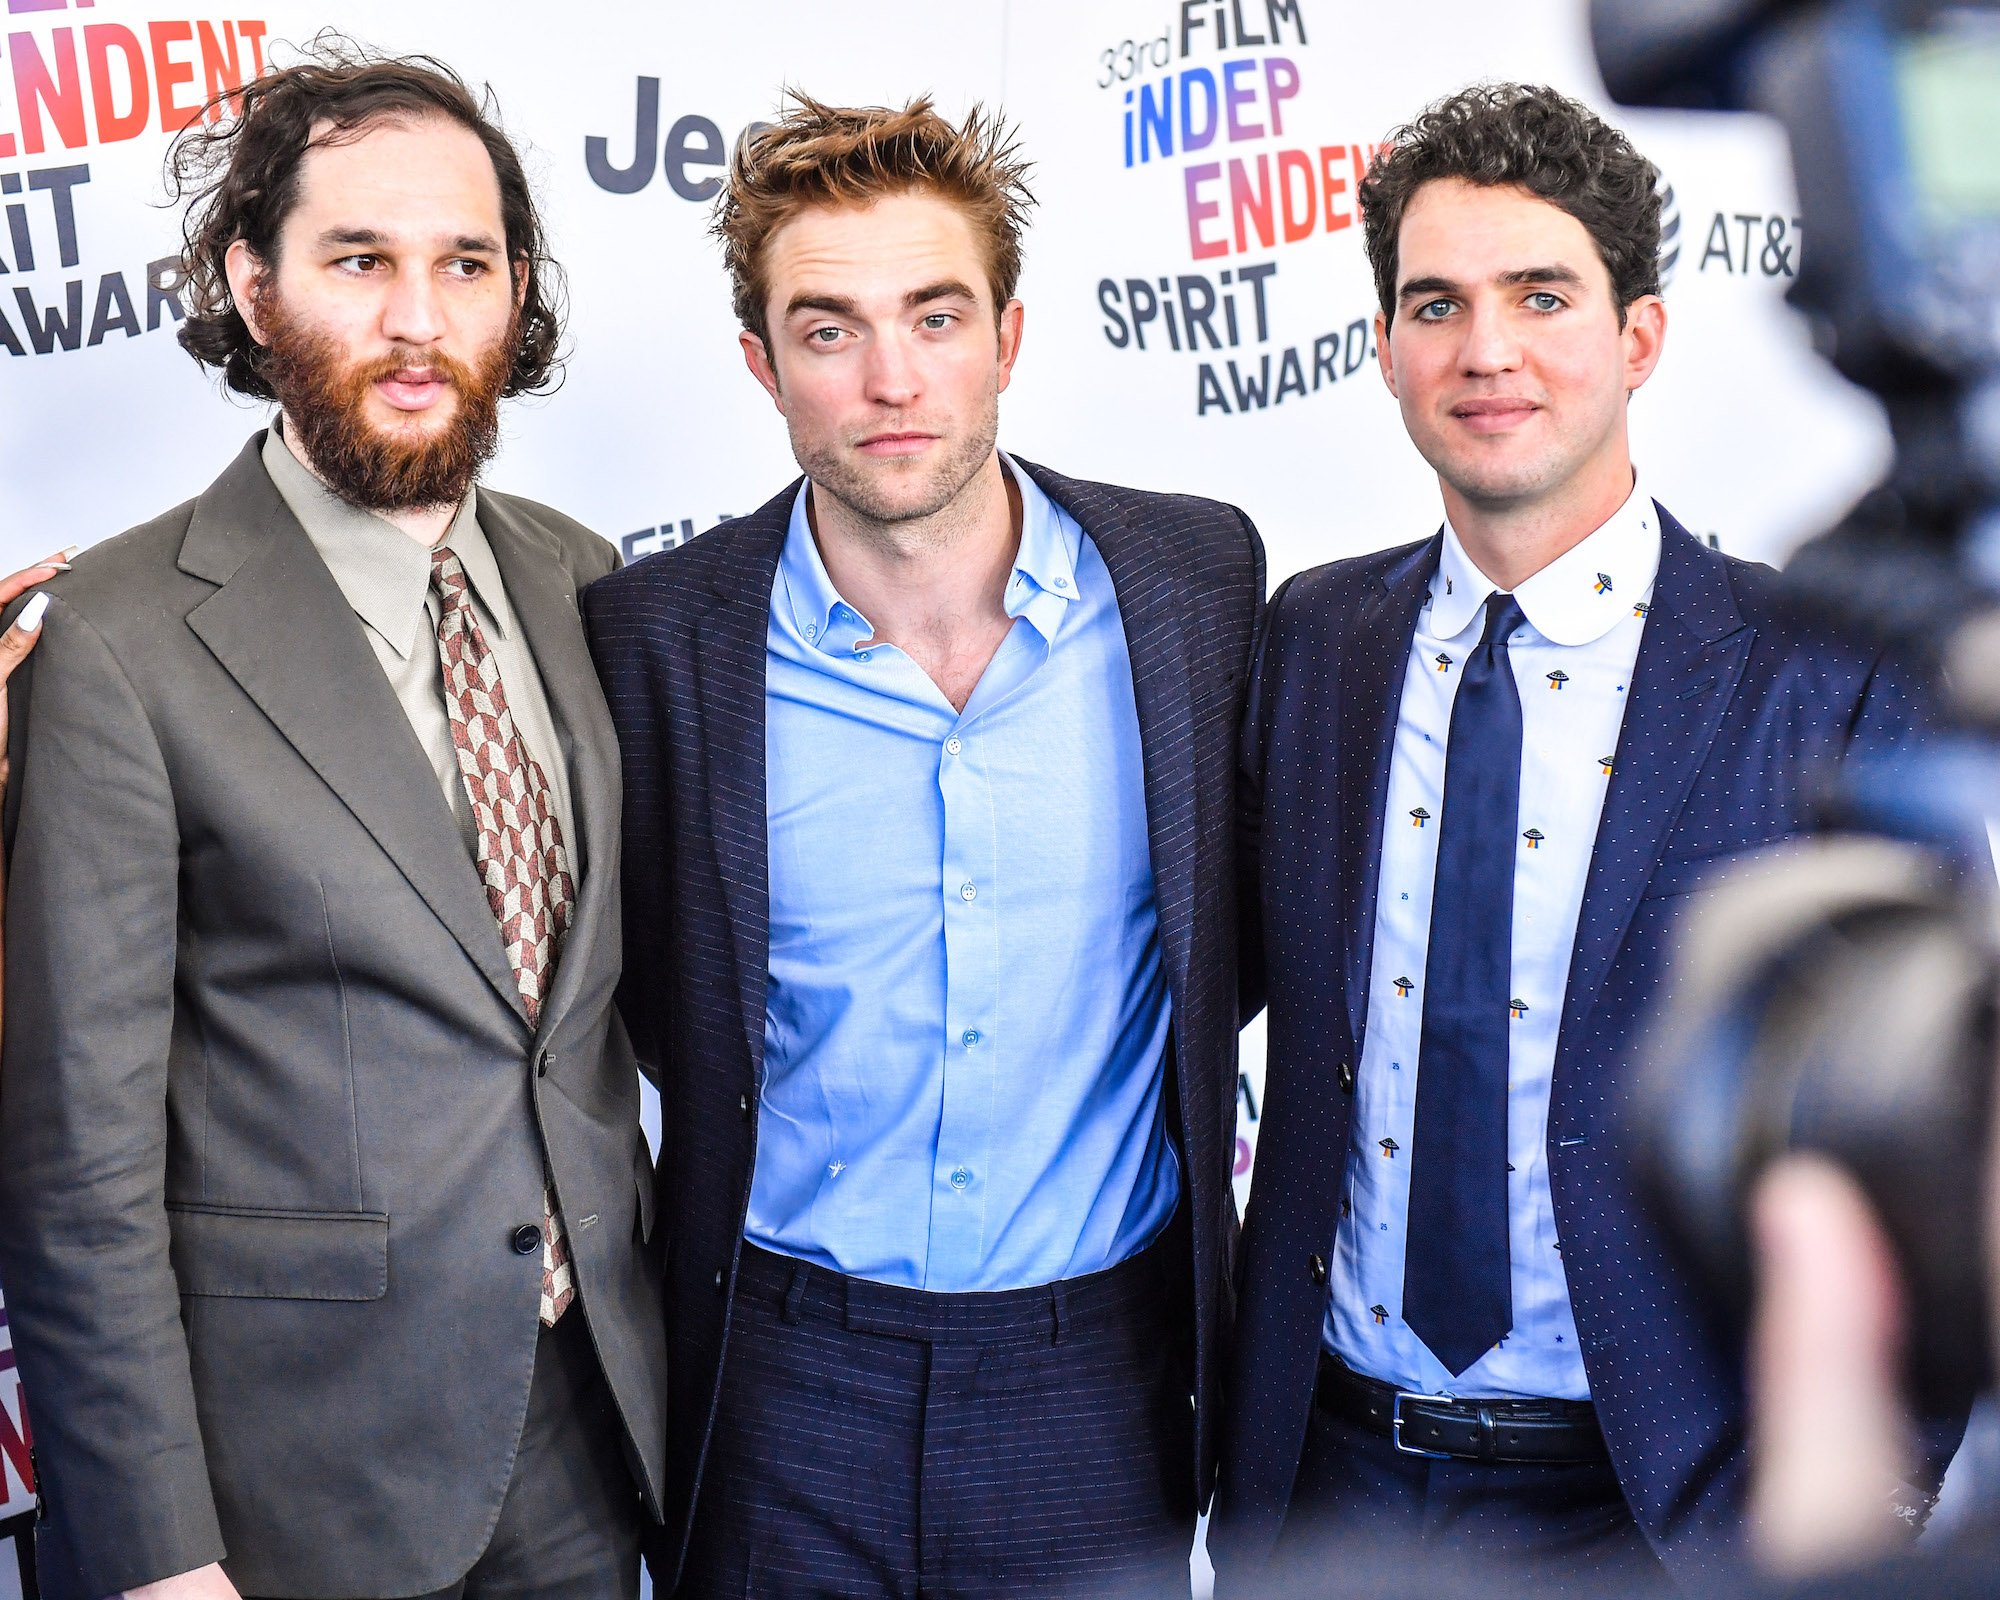 Josh Safdie, Robert Pattinson, and Benny Safdie at the 2018 Film Independent Spirit Awards on March 3, 2018